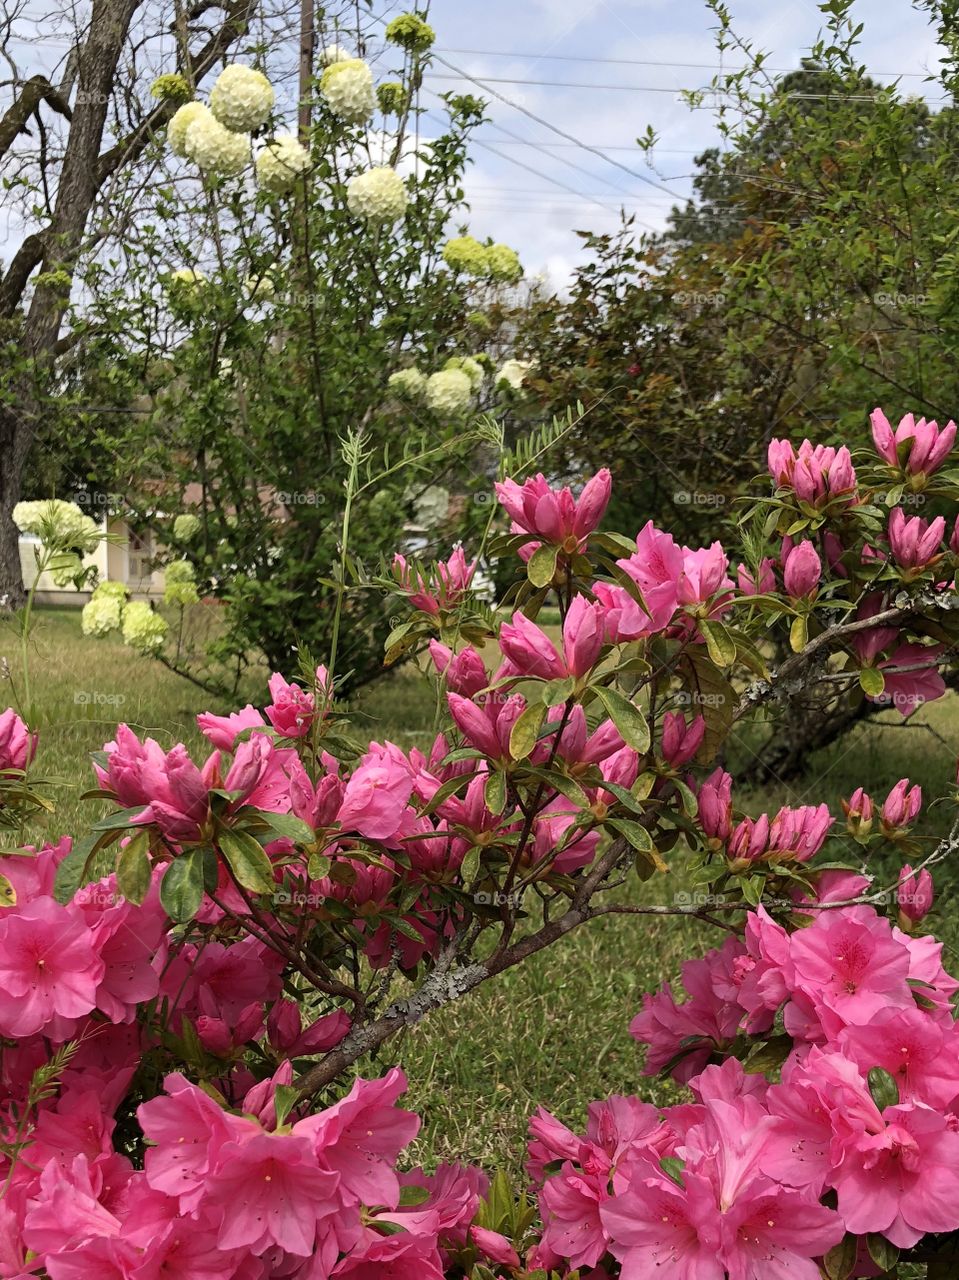 Beautiful park like scene with pink bushes and white bush peeking through. 